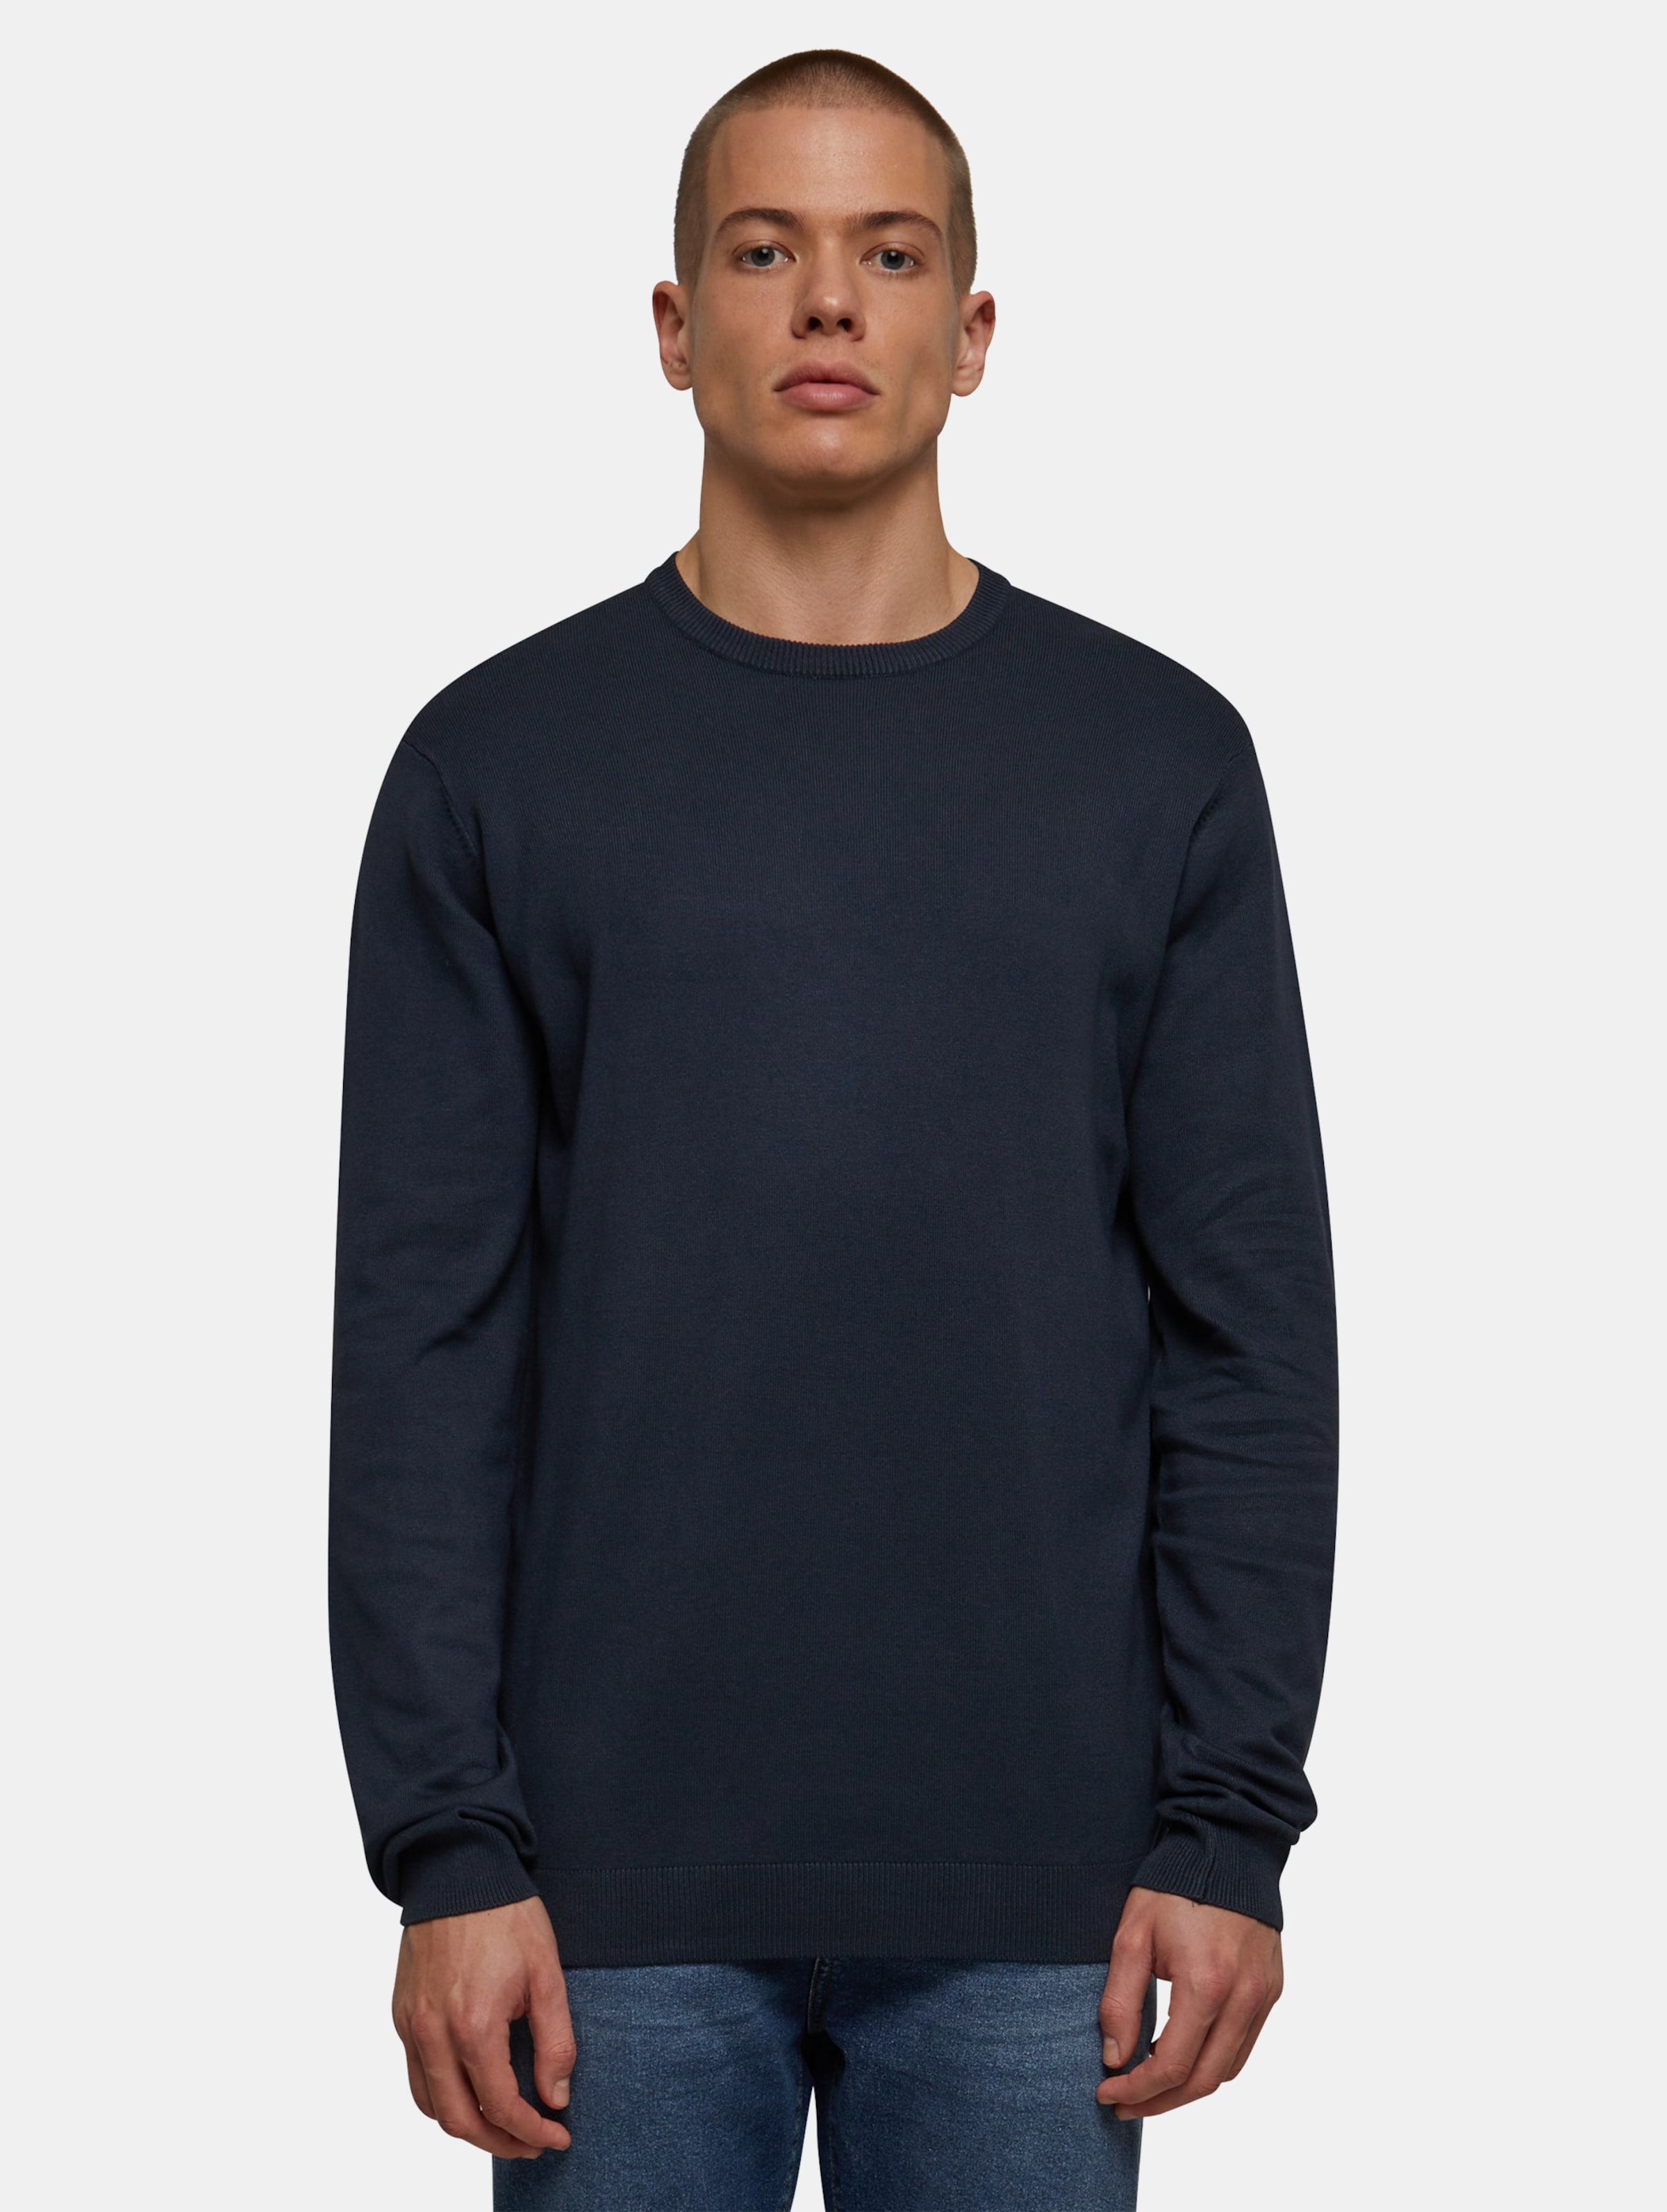 Urban Classics - Knitted Crewneck sweater - 3XL - Donkerblauw